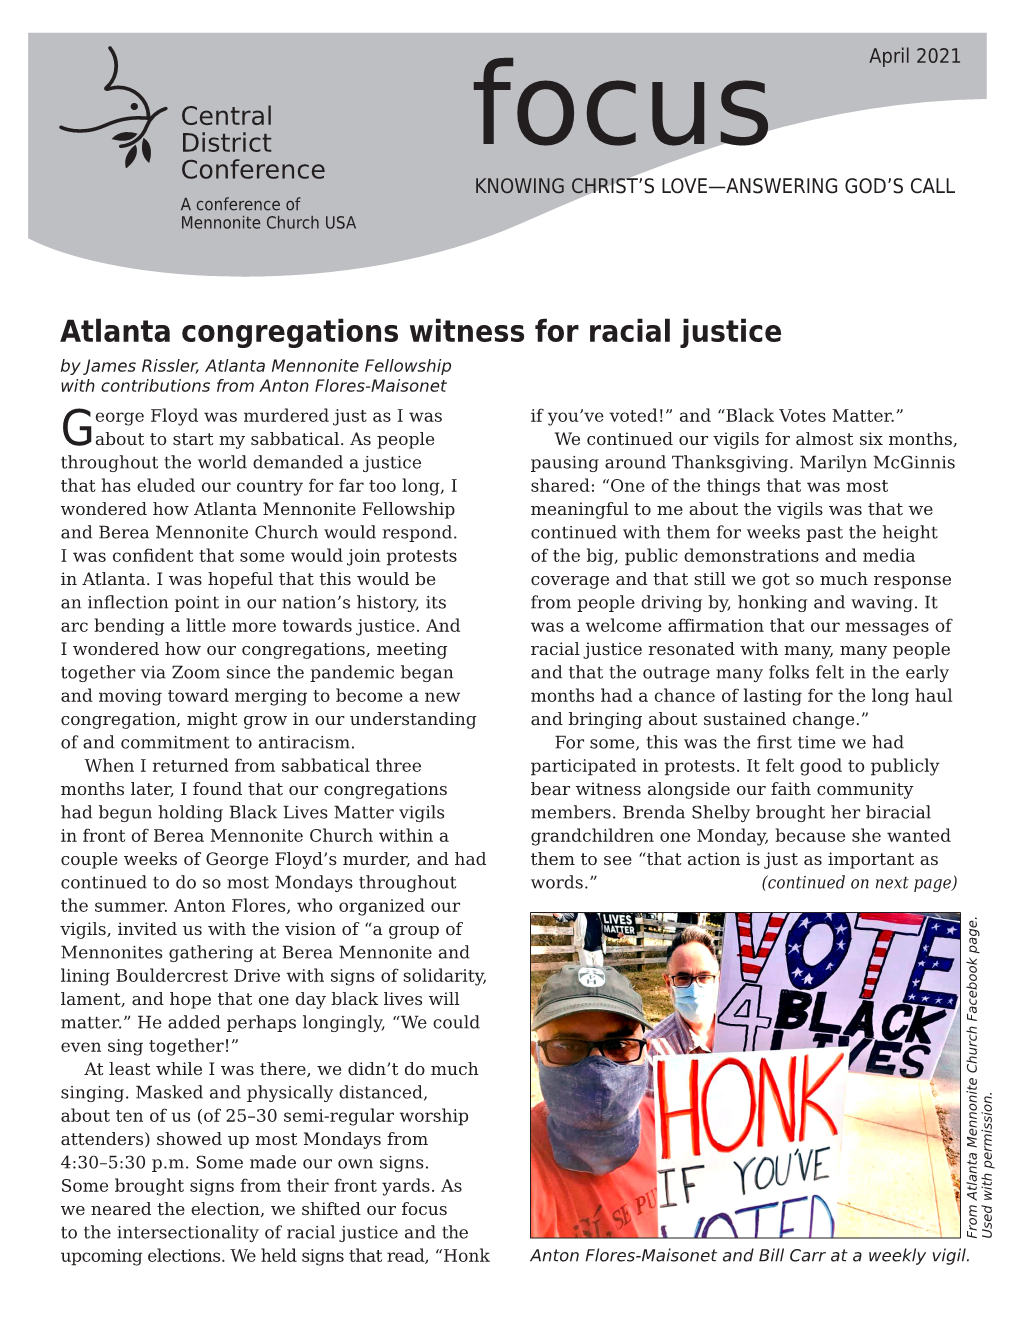 Atlanta Congregations Witness for Racial Justice